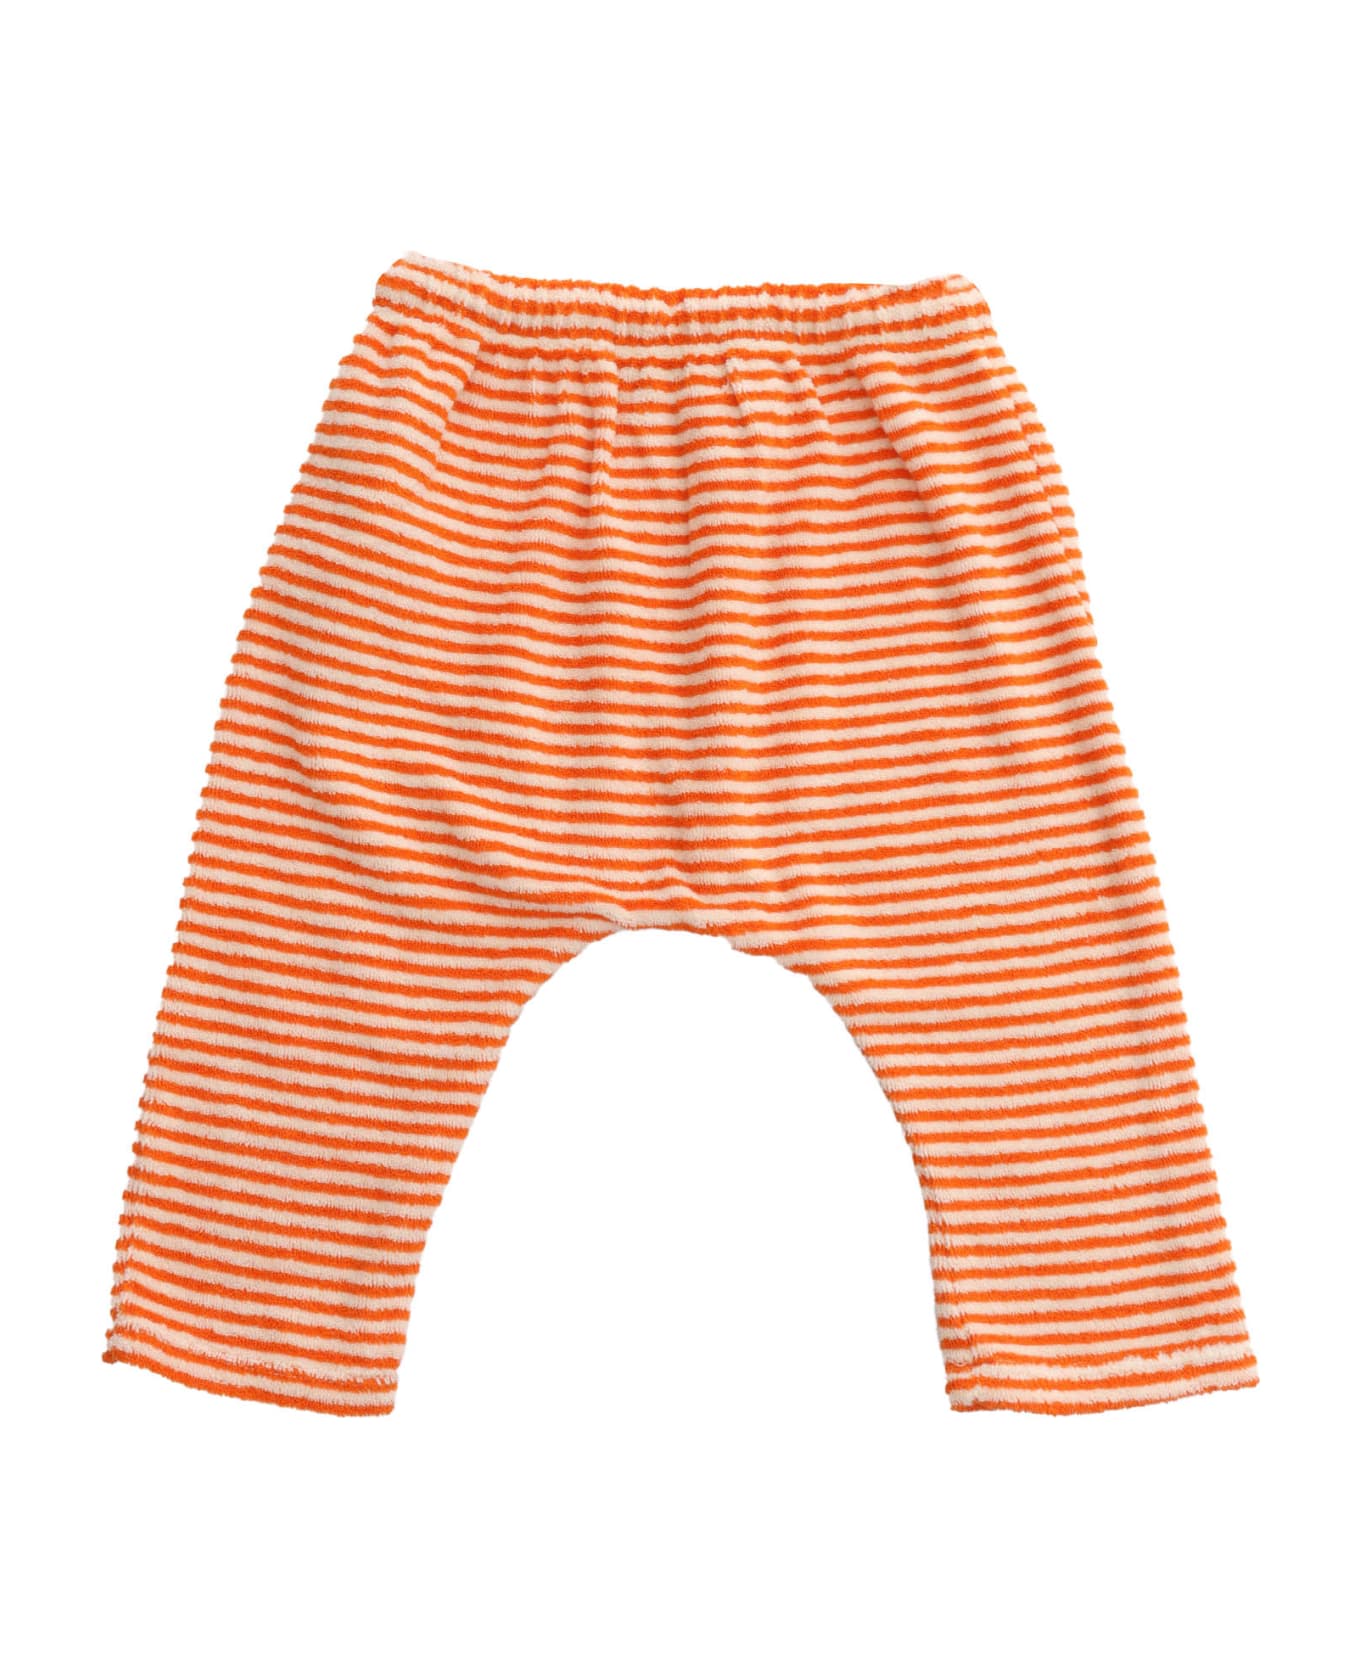 Bobo Choses Pantaloni Arancioni Da Neonato - ORANGE ボトムス